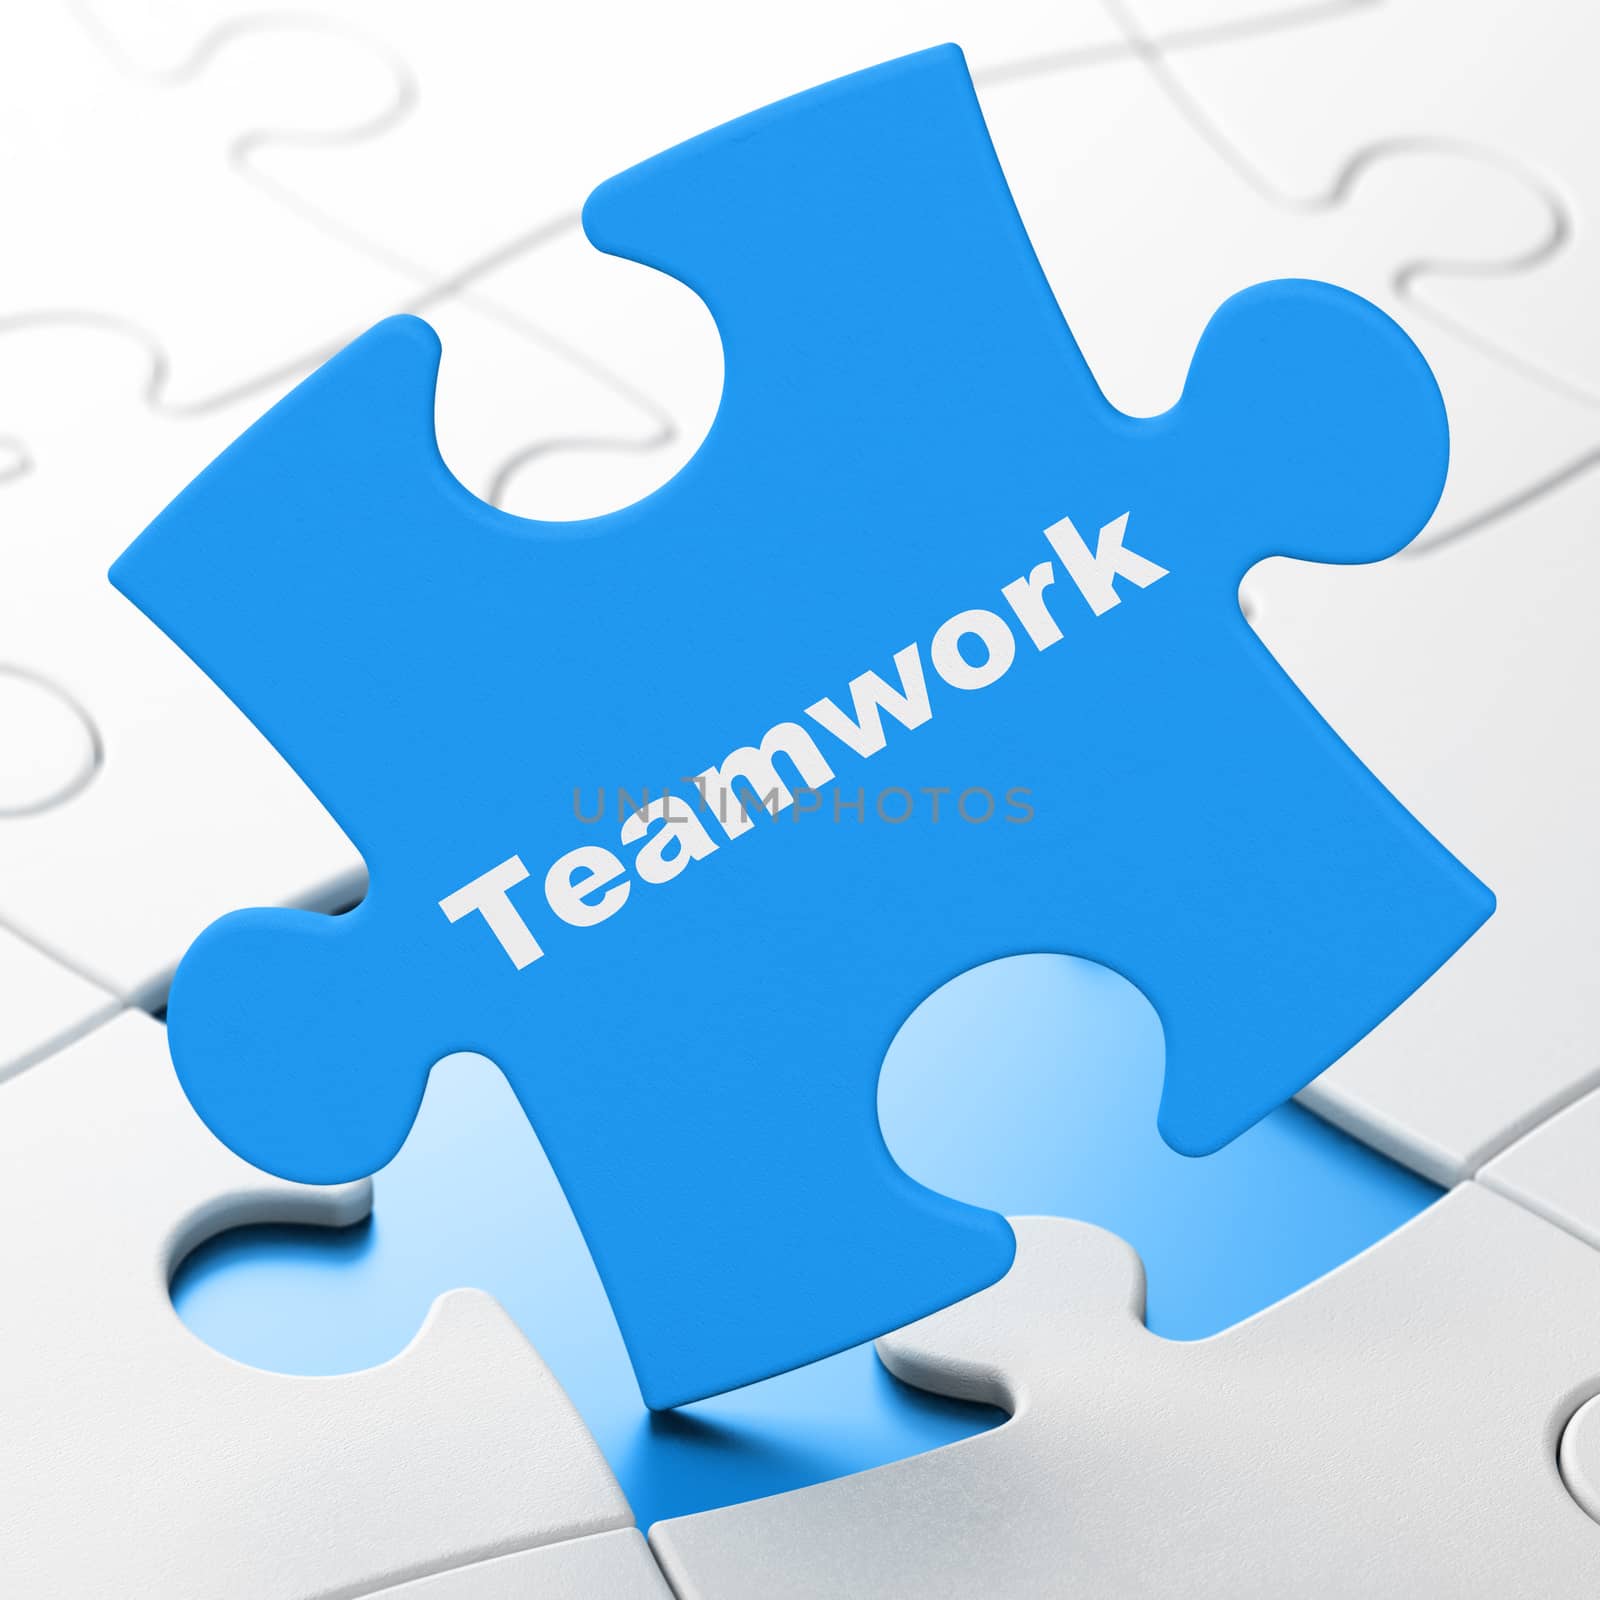 Business concept: Teamwork on Blue puzzle pieces background, 3d render